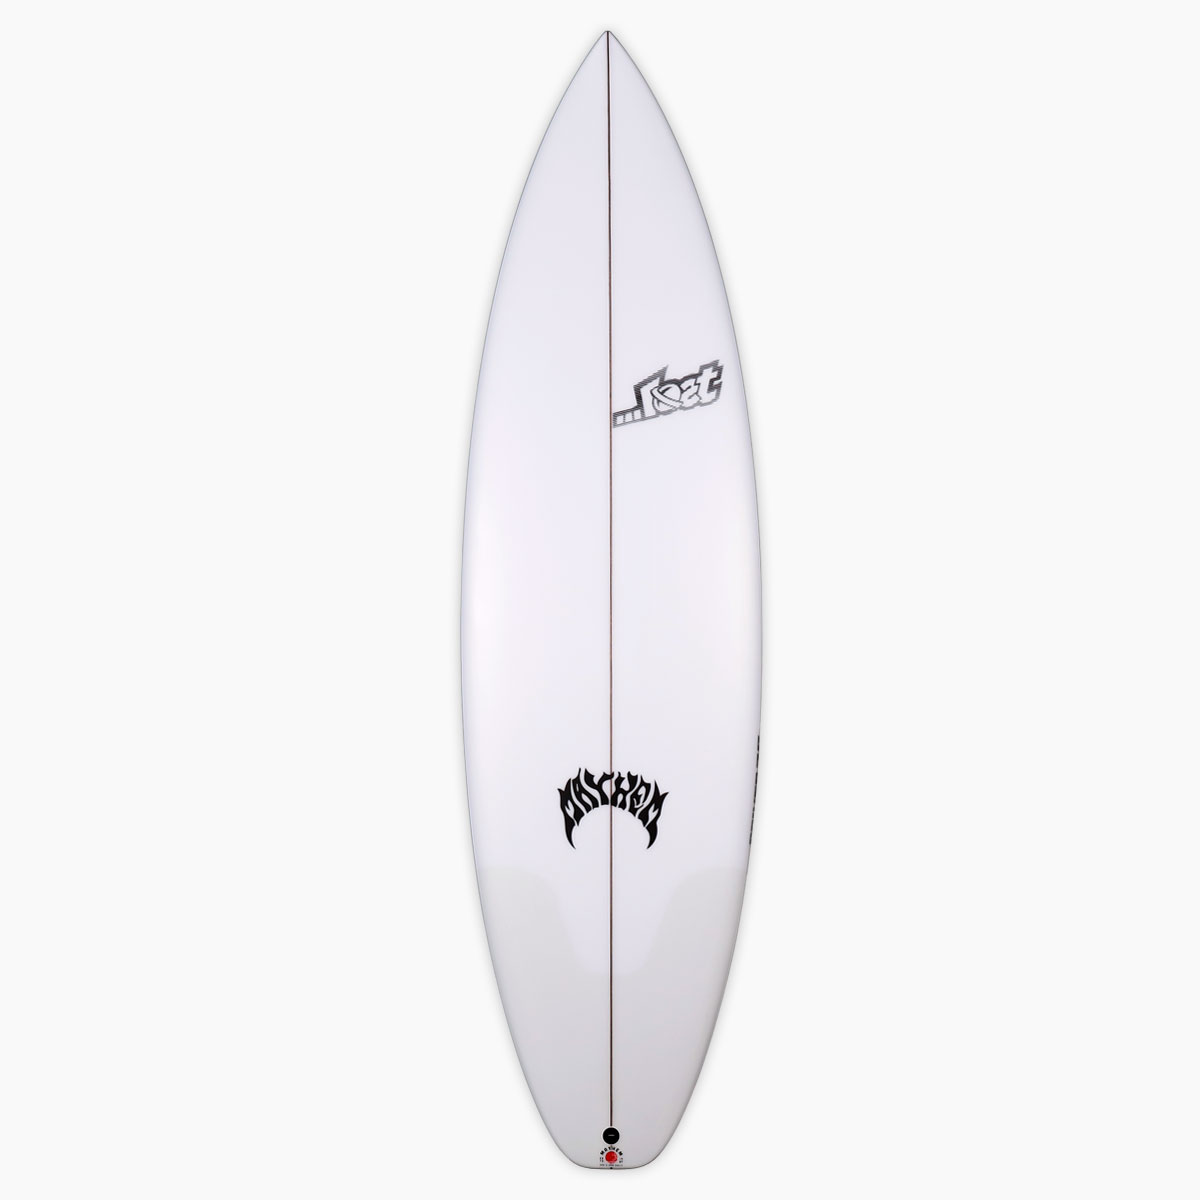 SurfBoardNet / ブランド:LOST SURFBOARDS モデル:DRIVER 3.0 Round